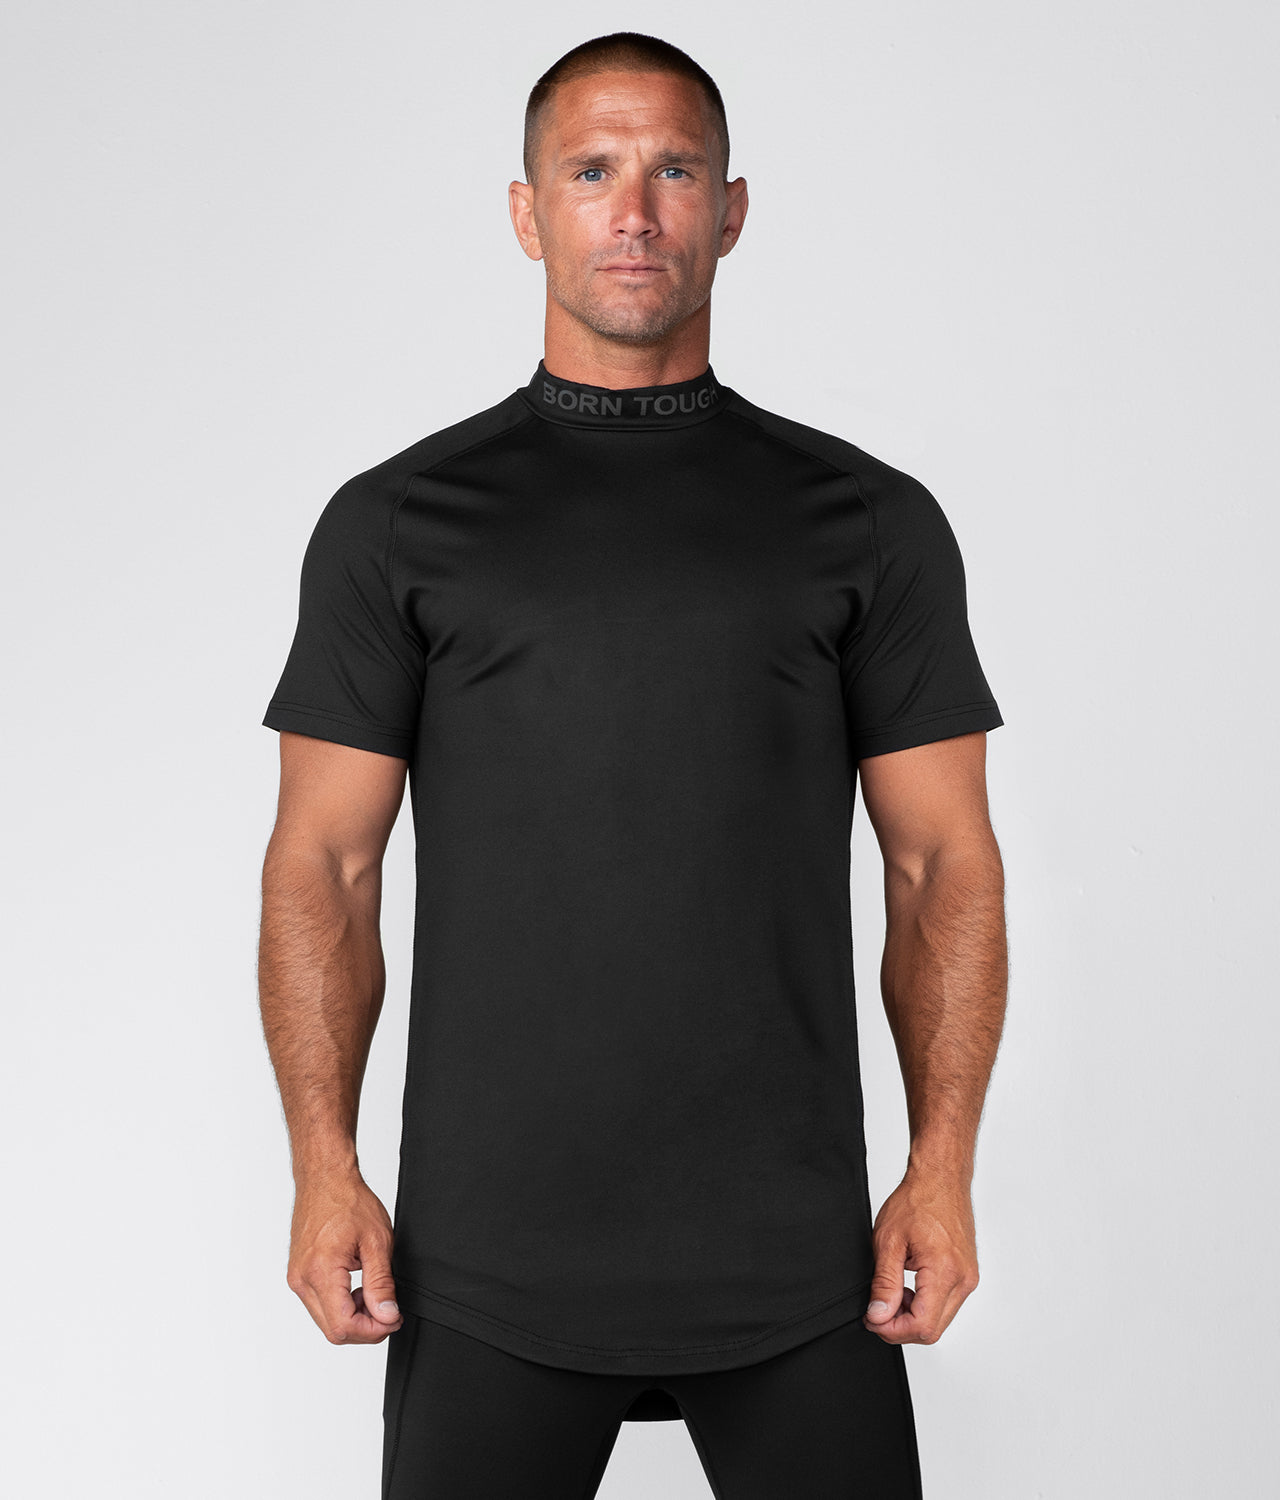 Born Tough Mock Neck Short Sleeve Compression Black Gym Workout Shirt